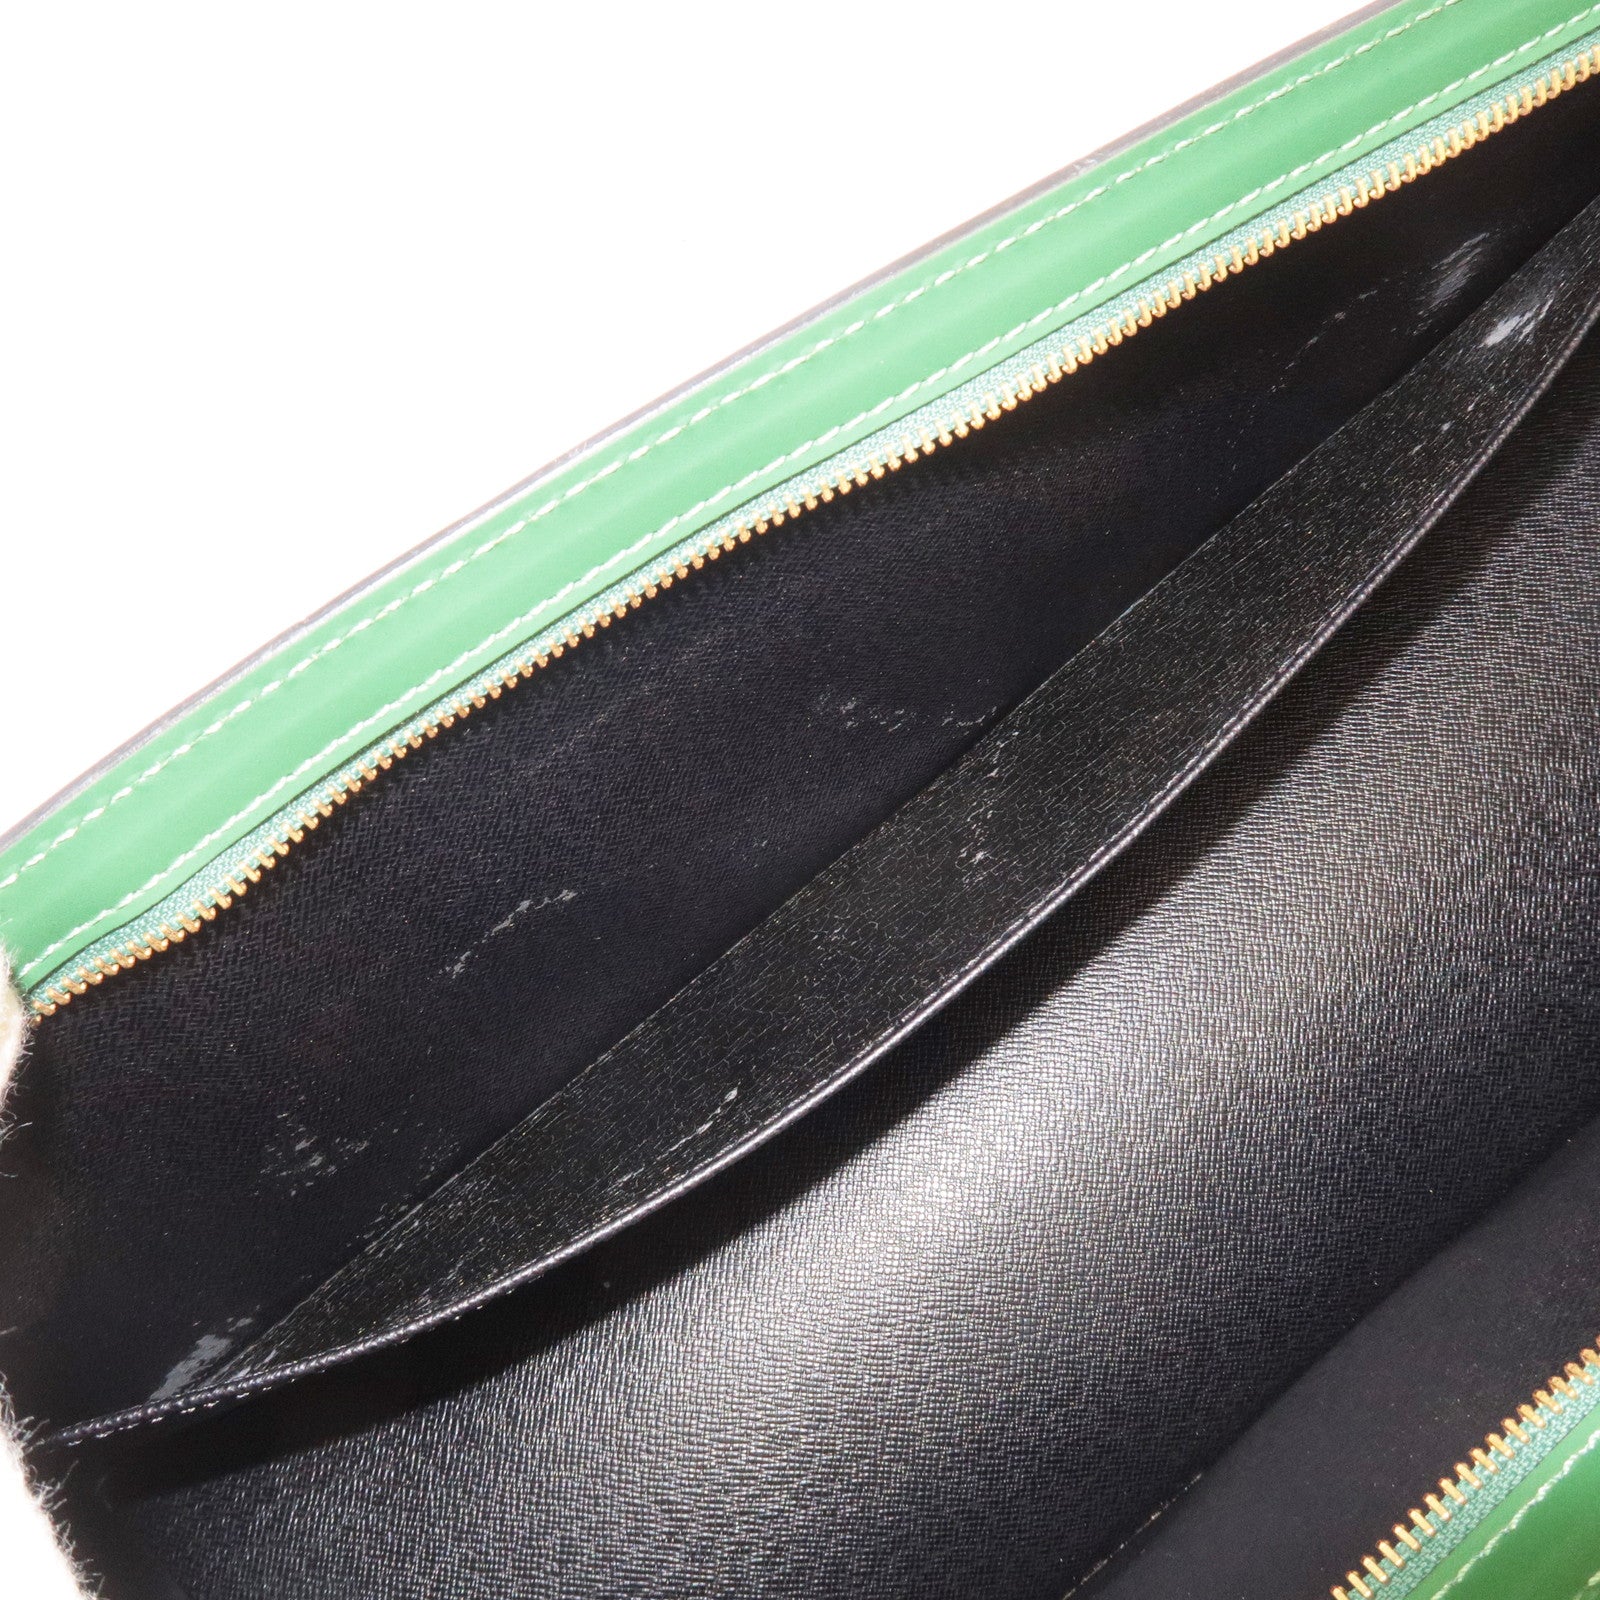 Auth Louis Vuitton Epi Sac Triangle Sac Triangle M52094 Handbag Borneo  Green